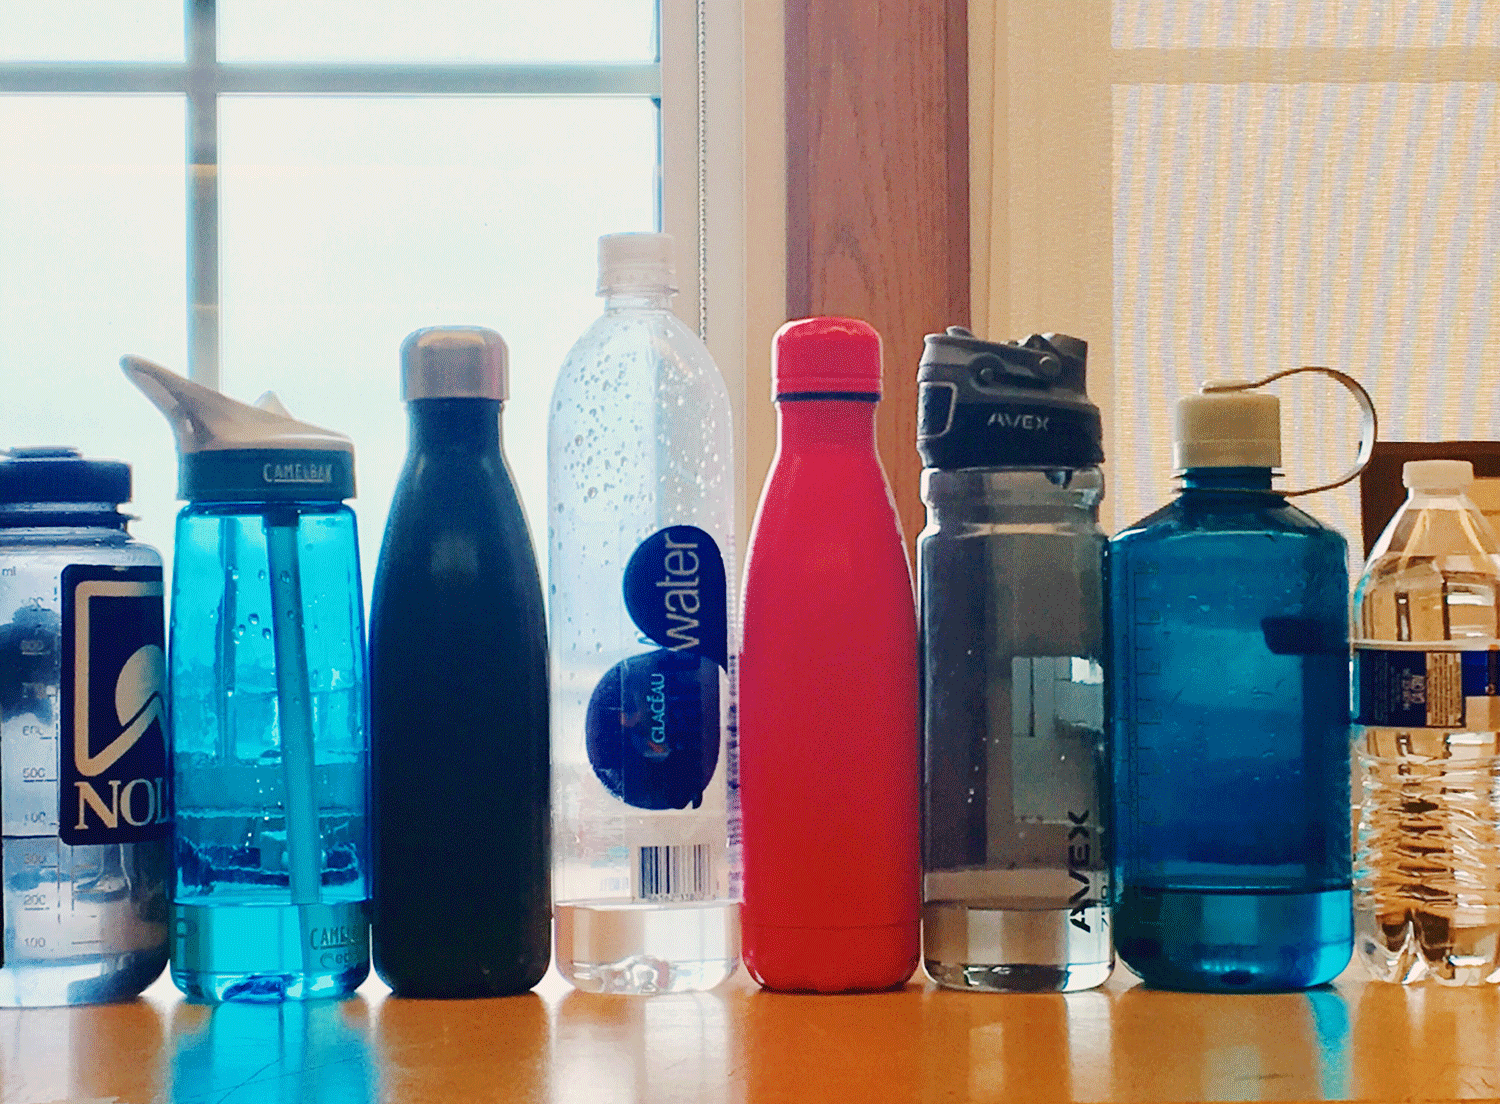 Hydrate or Diedrate Water Bottle